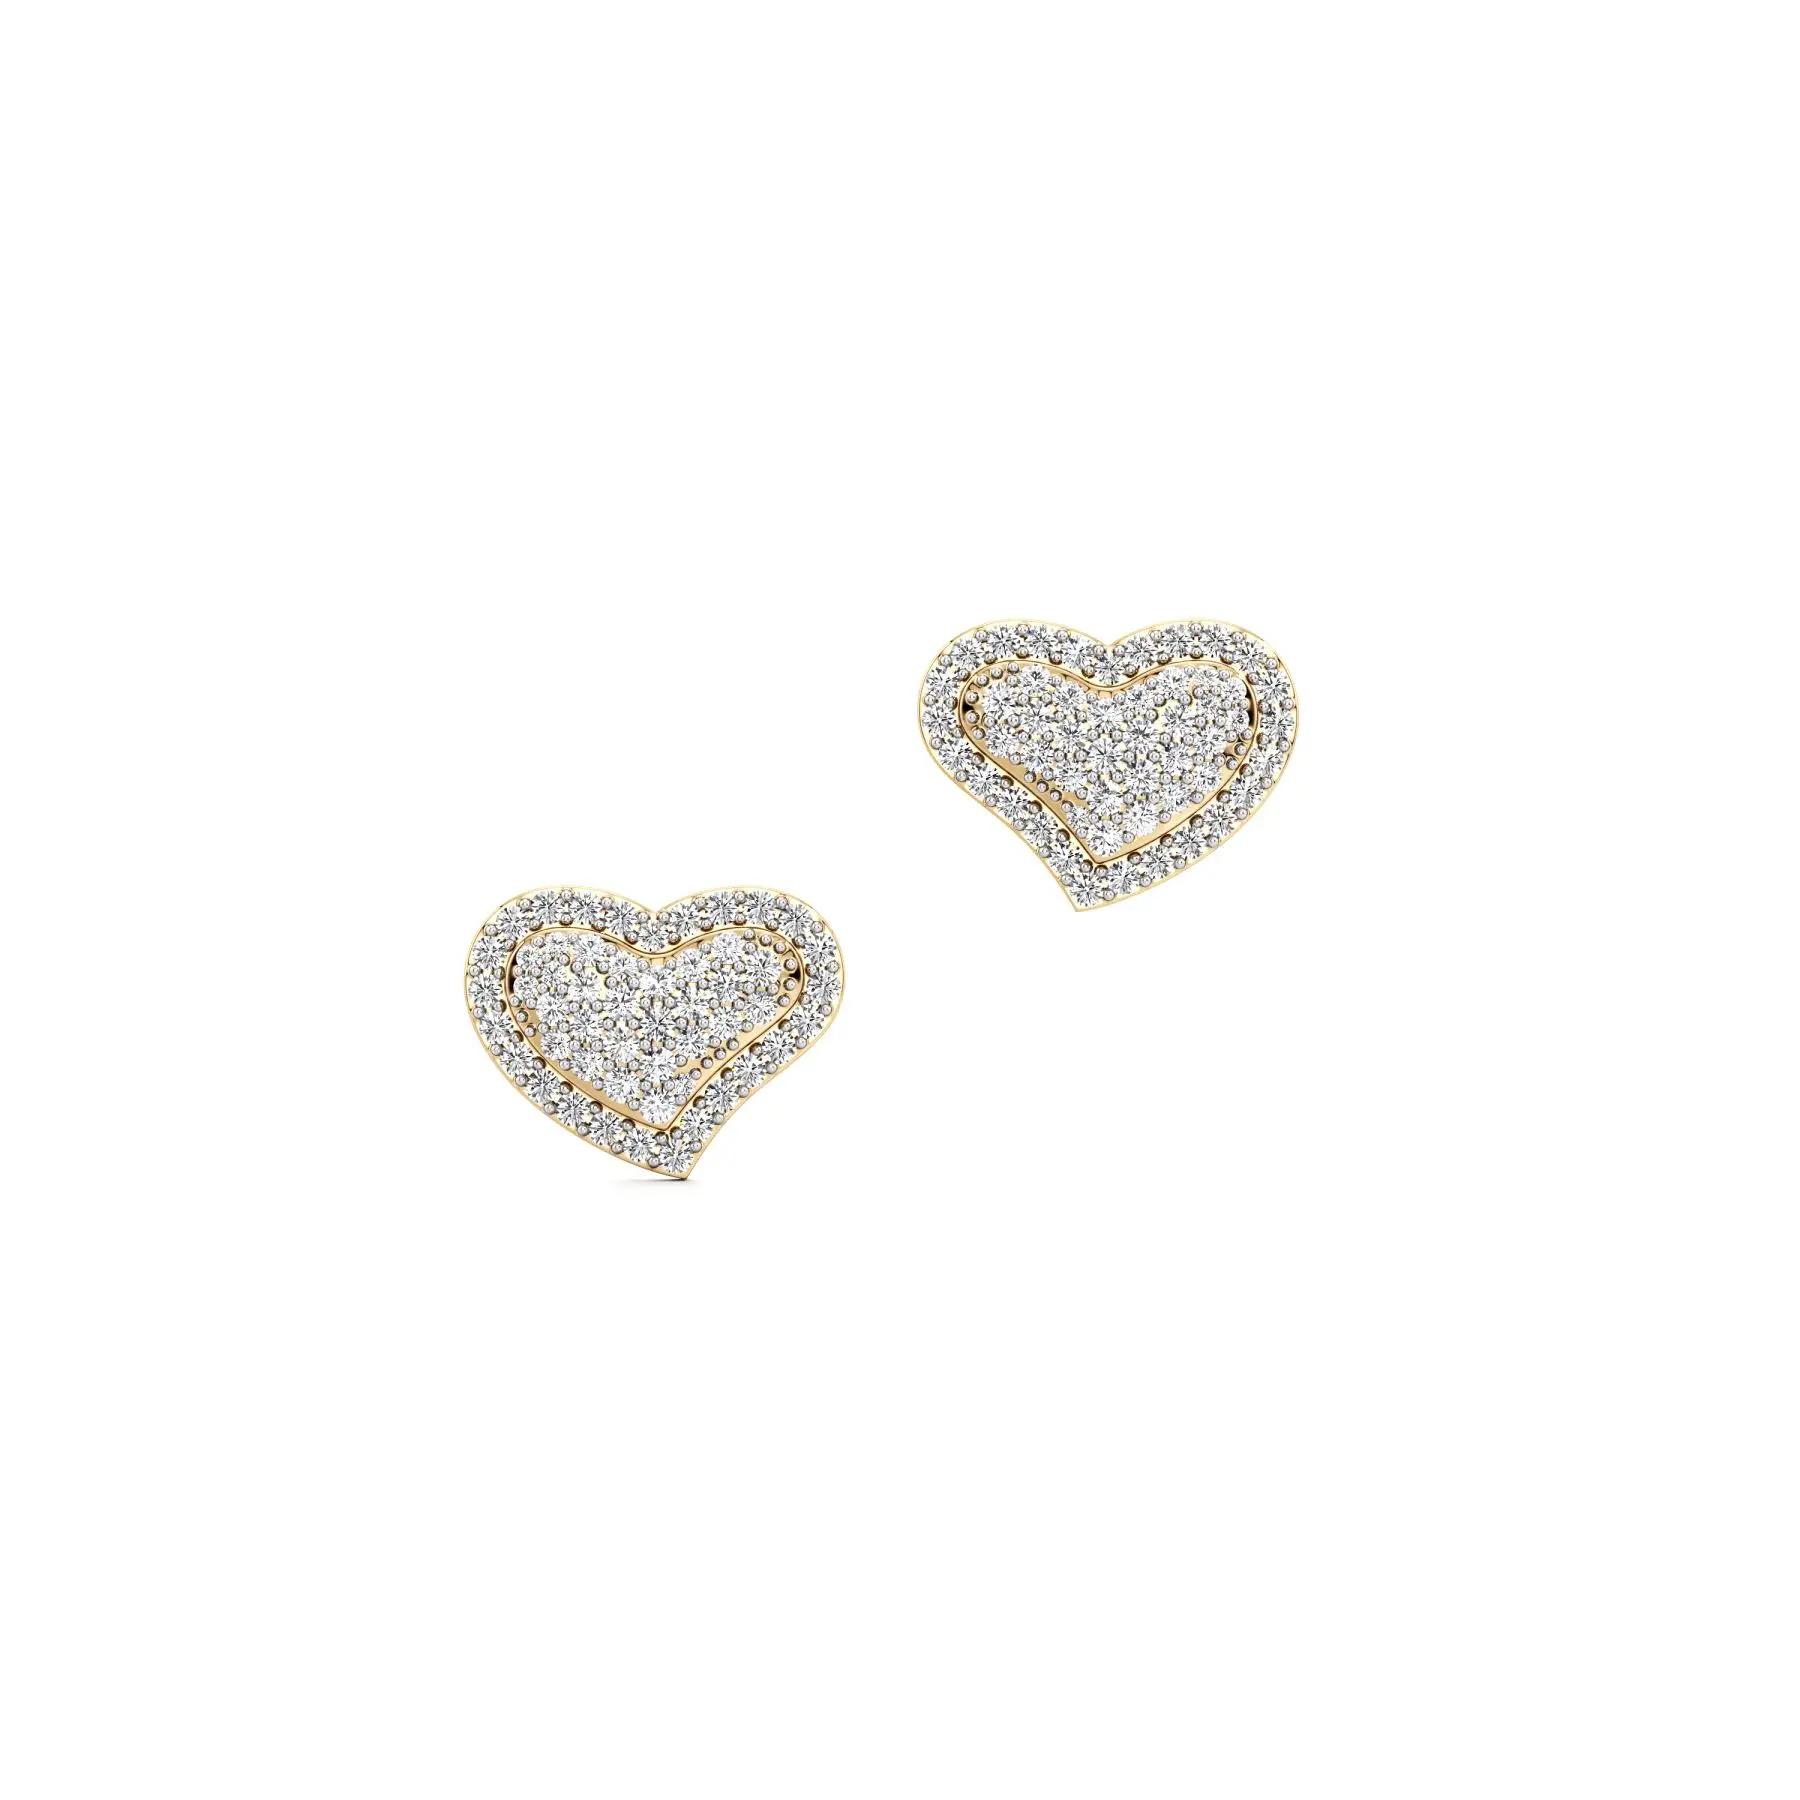 Tilted Love Diamond Earrings in Yellow 10k Gold